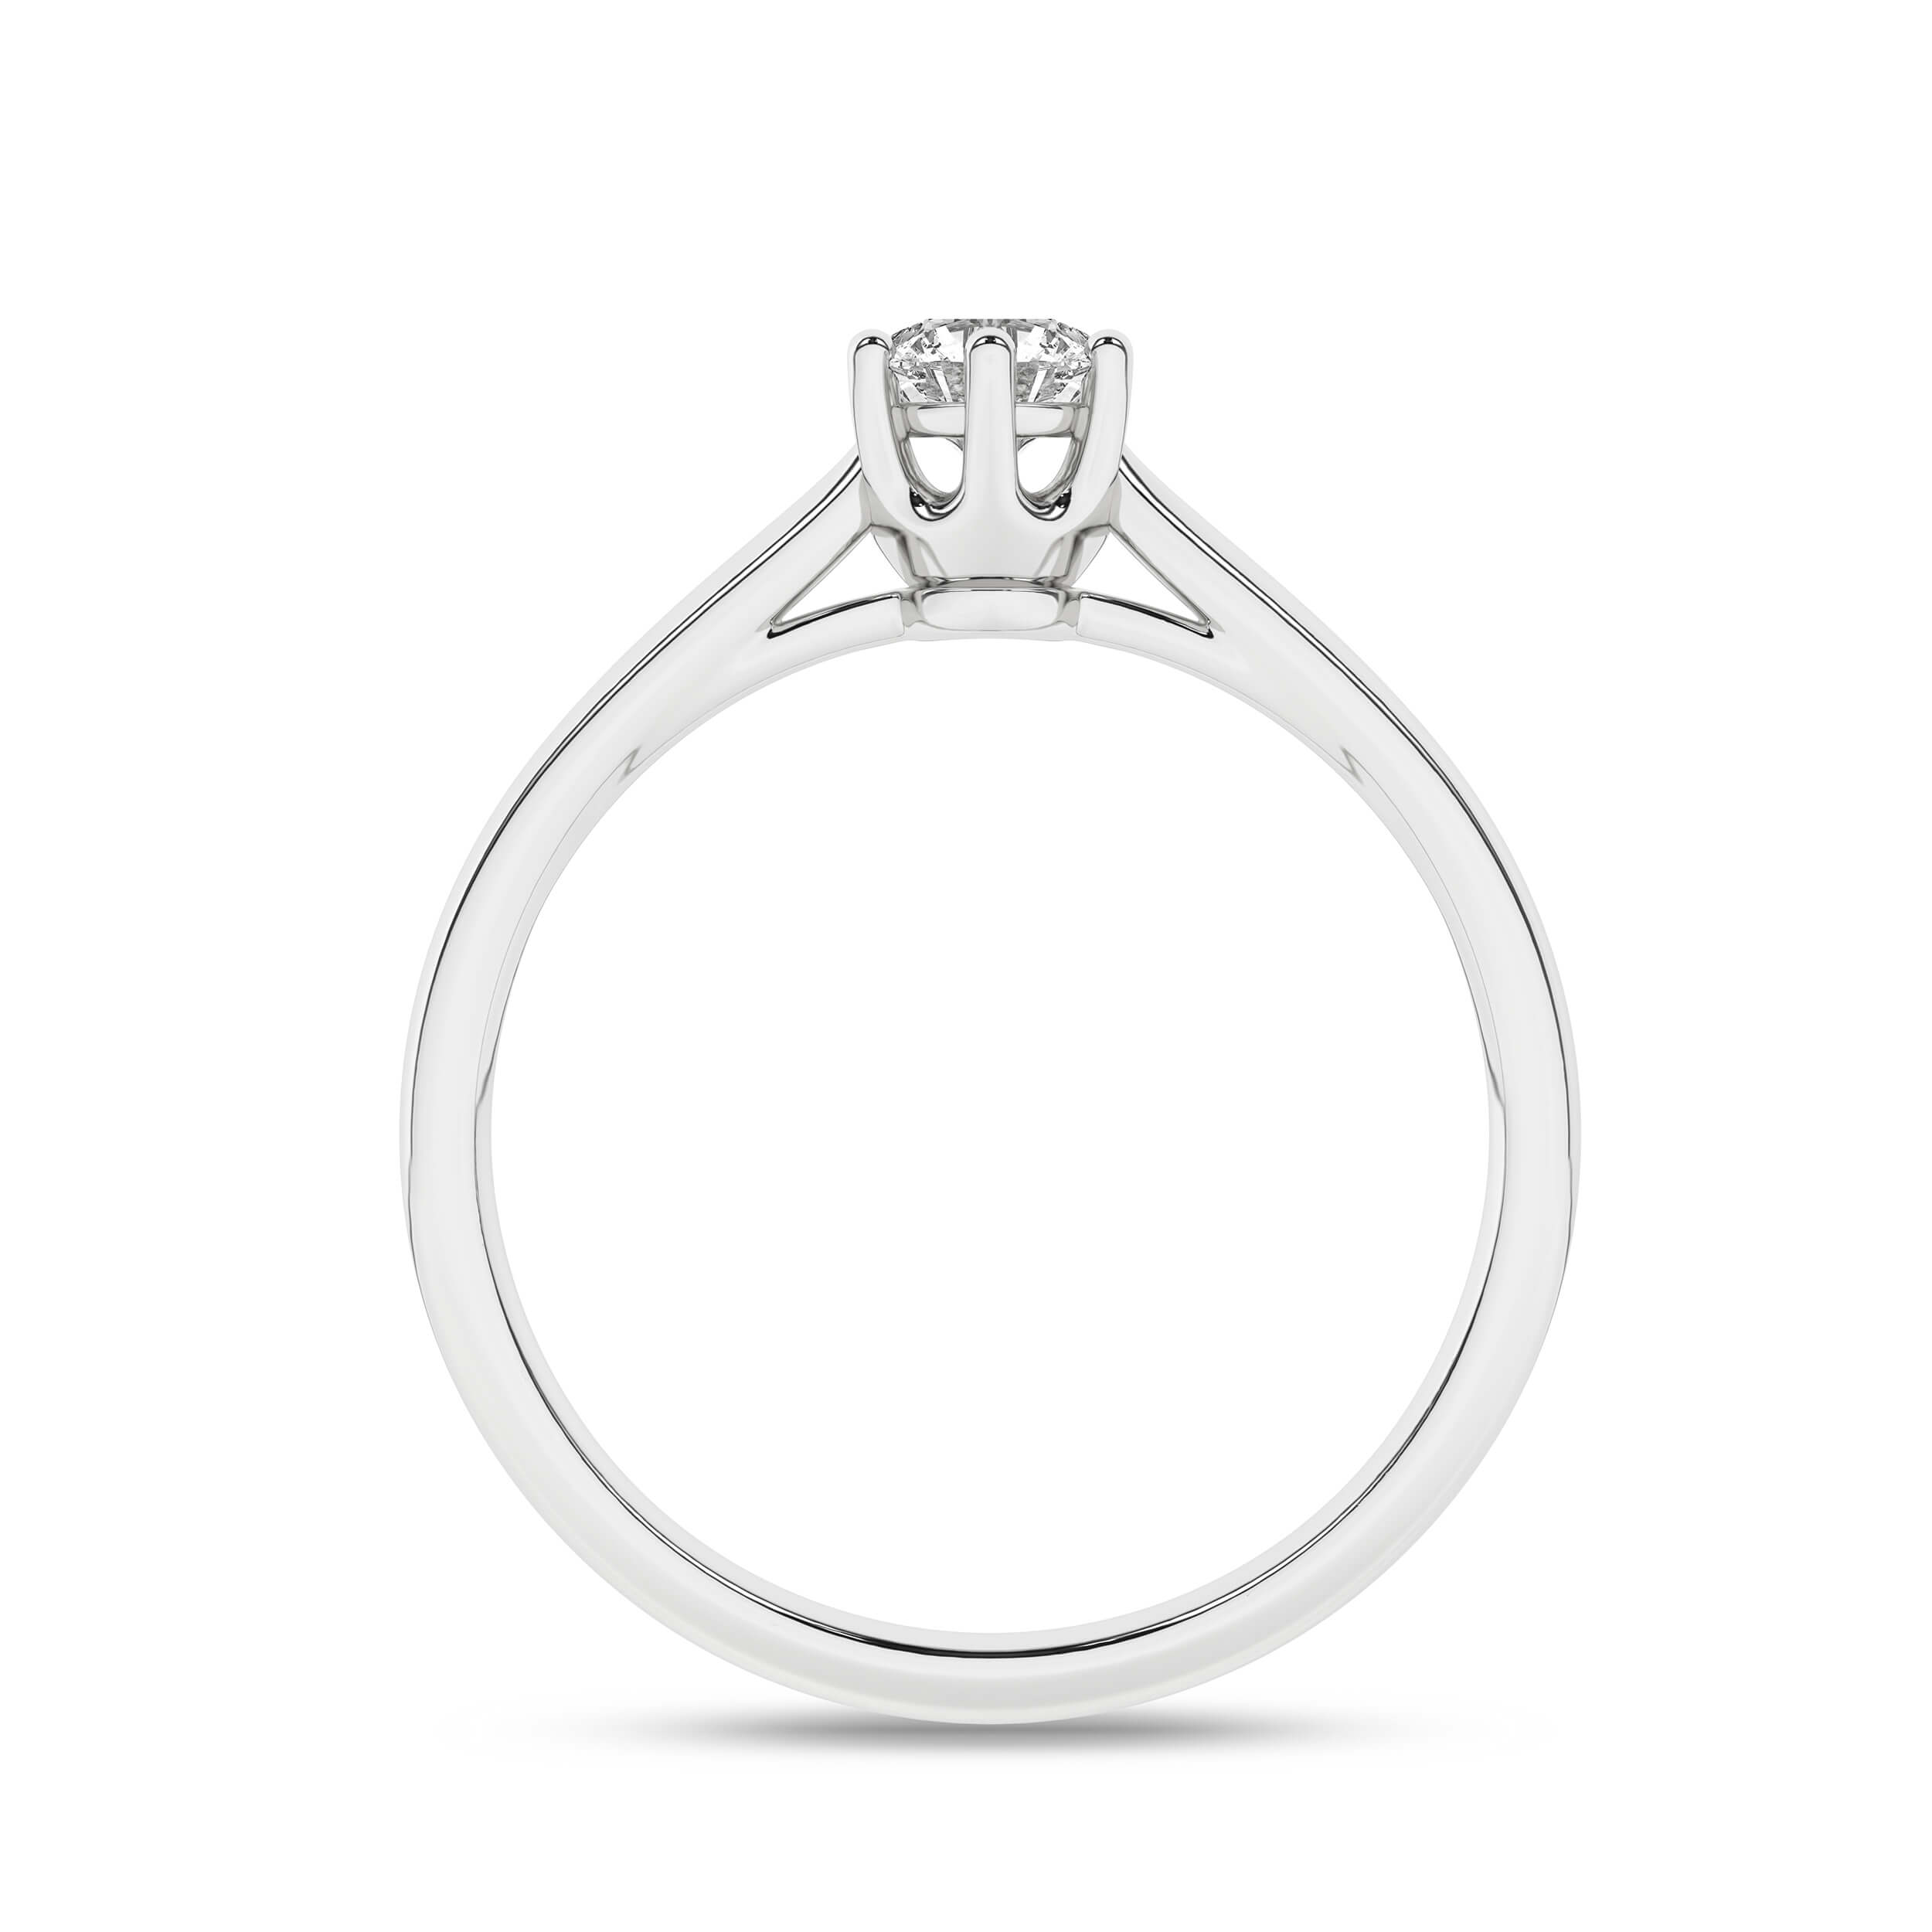 Inel de logodna din Aur Alb 14K cu Diamant 0.25Ct, articol RS1477, previzualizare foto 3